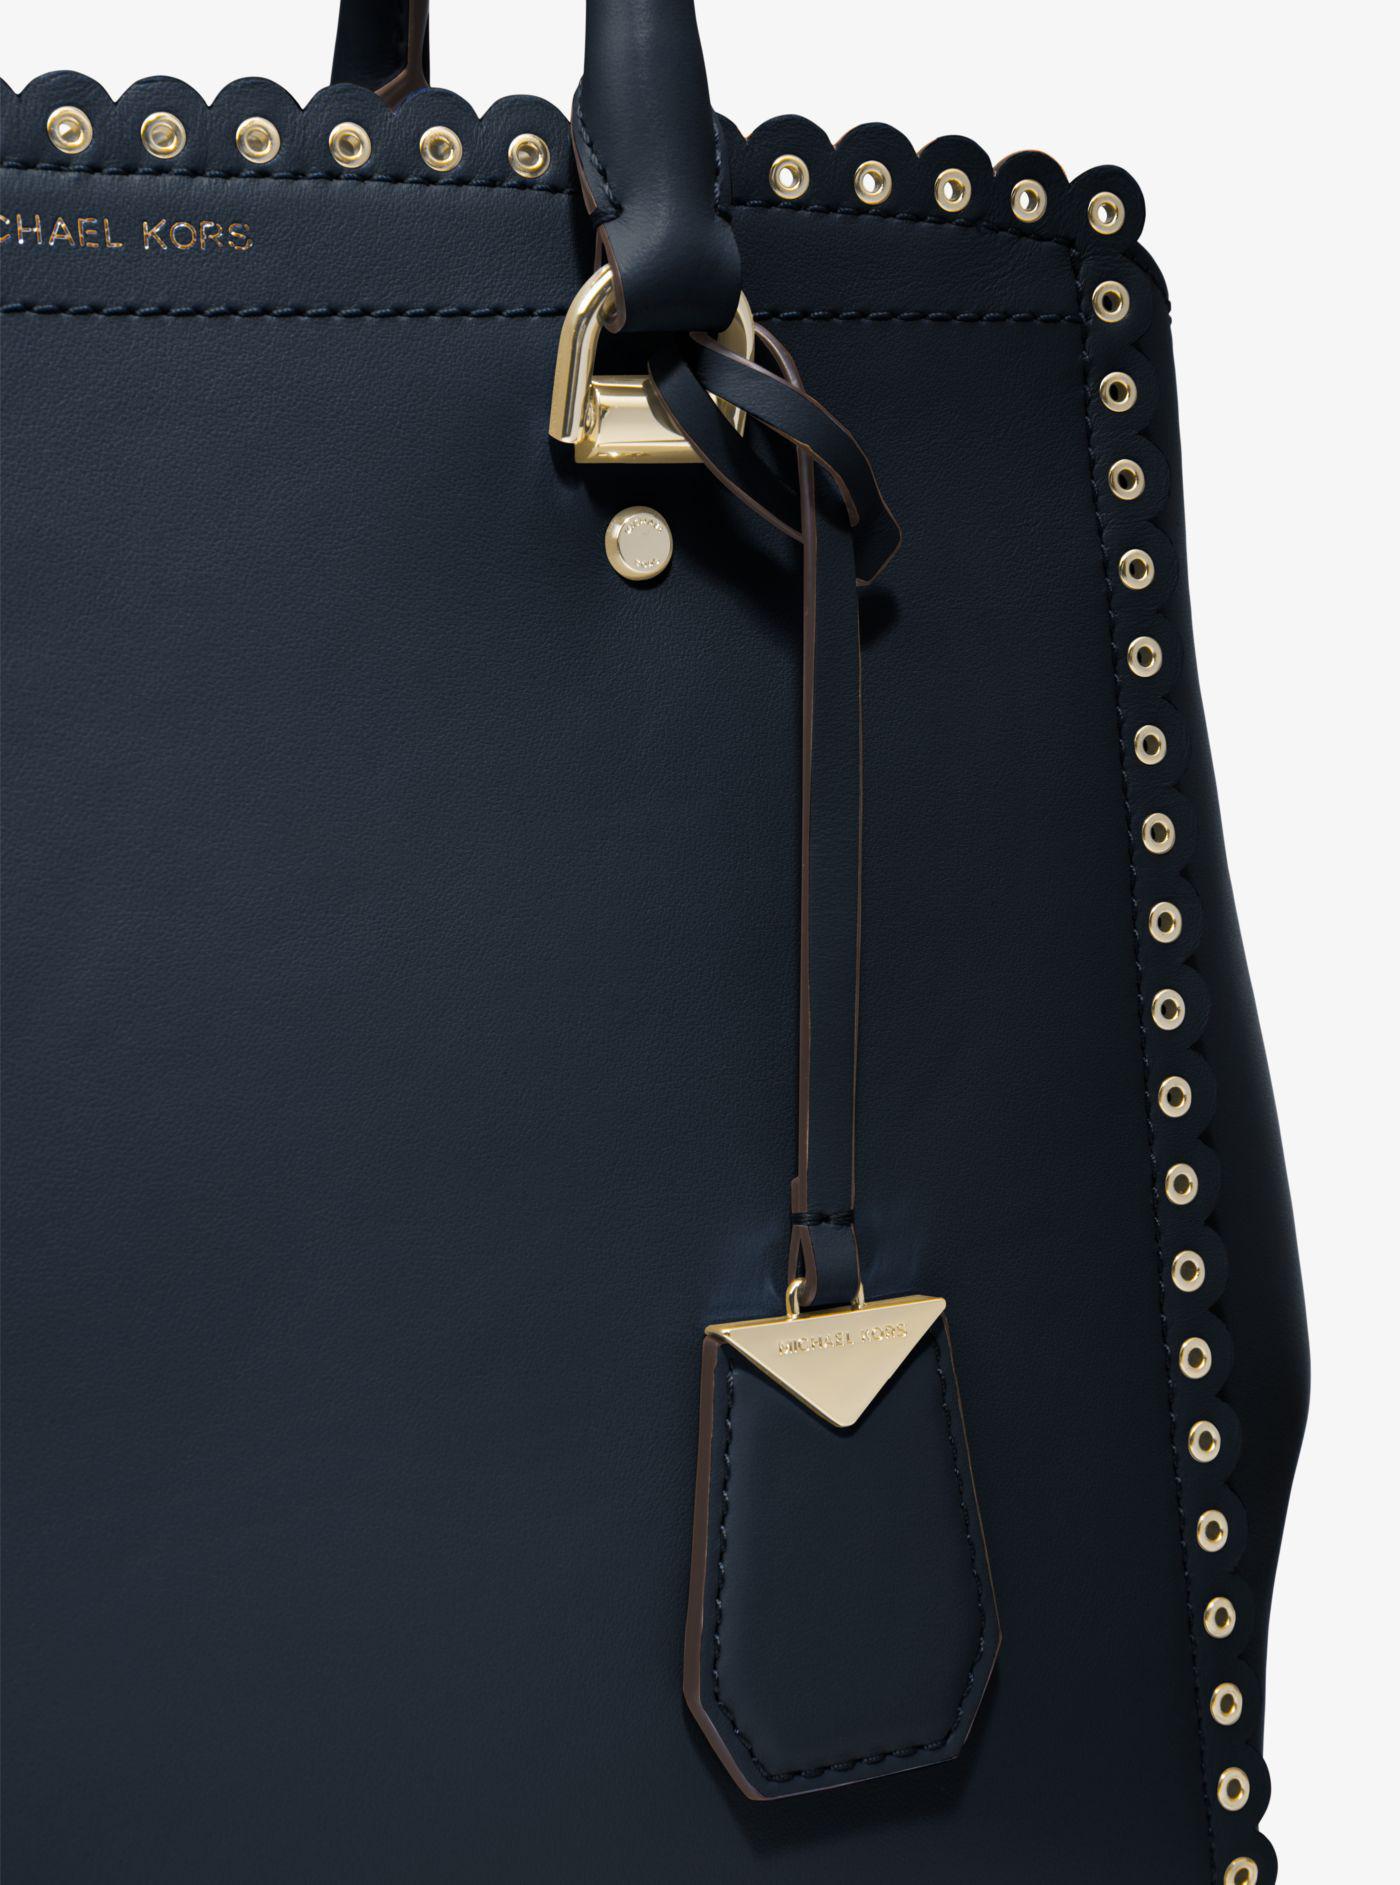 michael kors benning large scalloped leather satchel